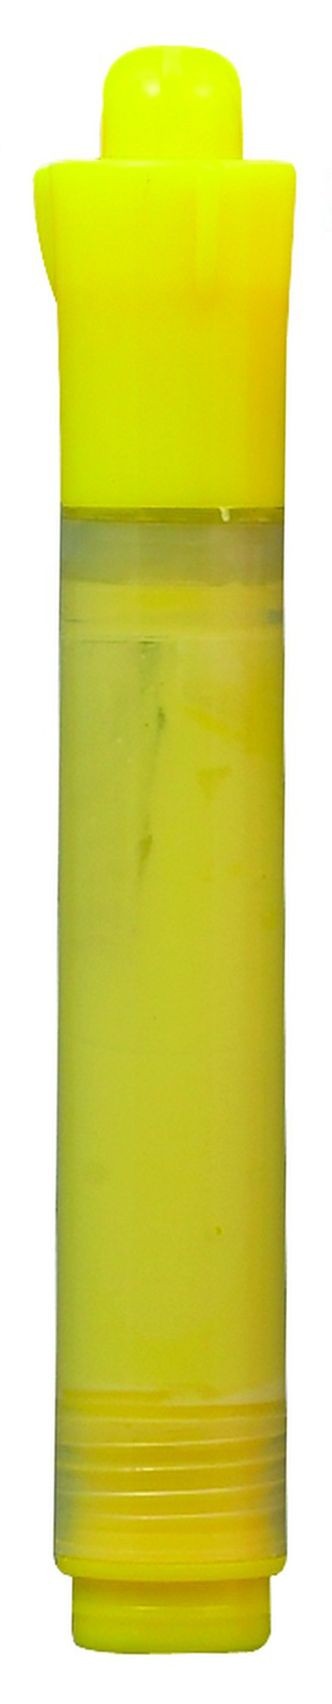 Winco MBM-Y Deluxe Neon Marker, Yellow